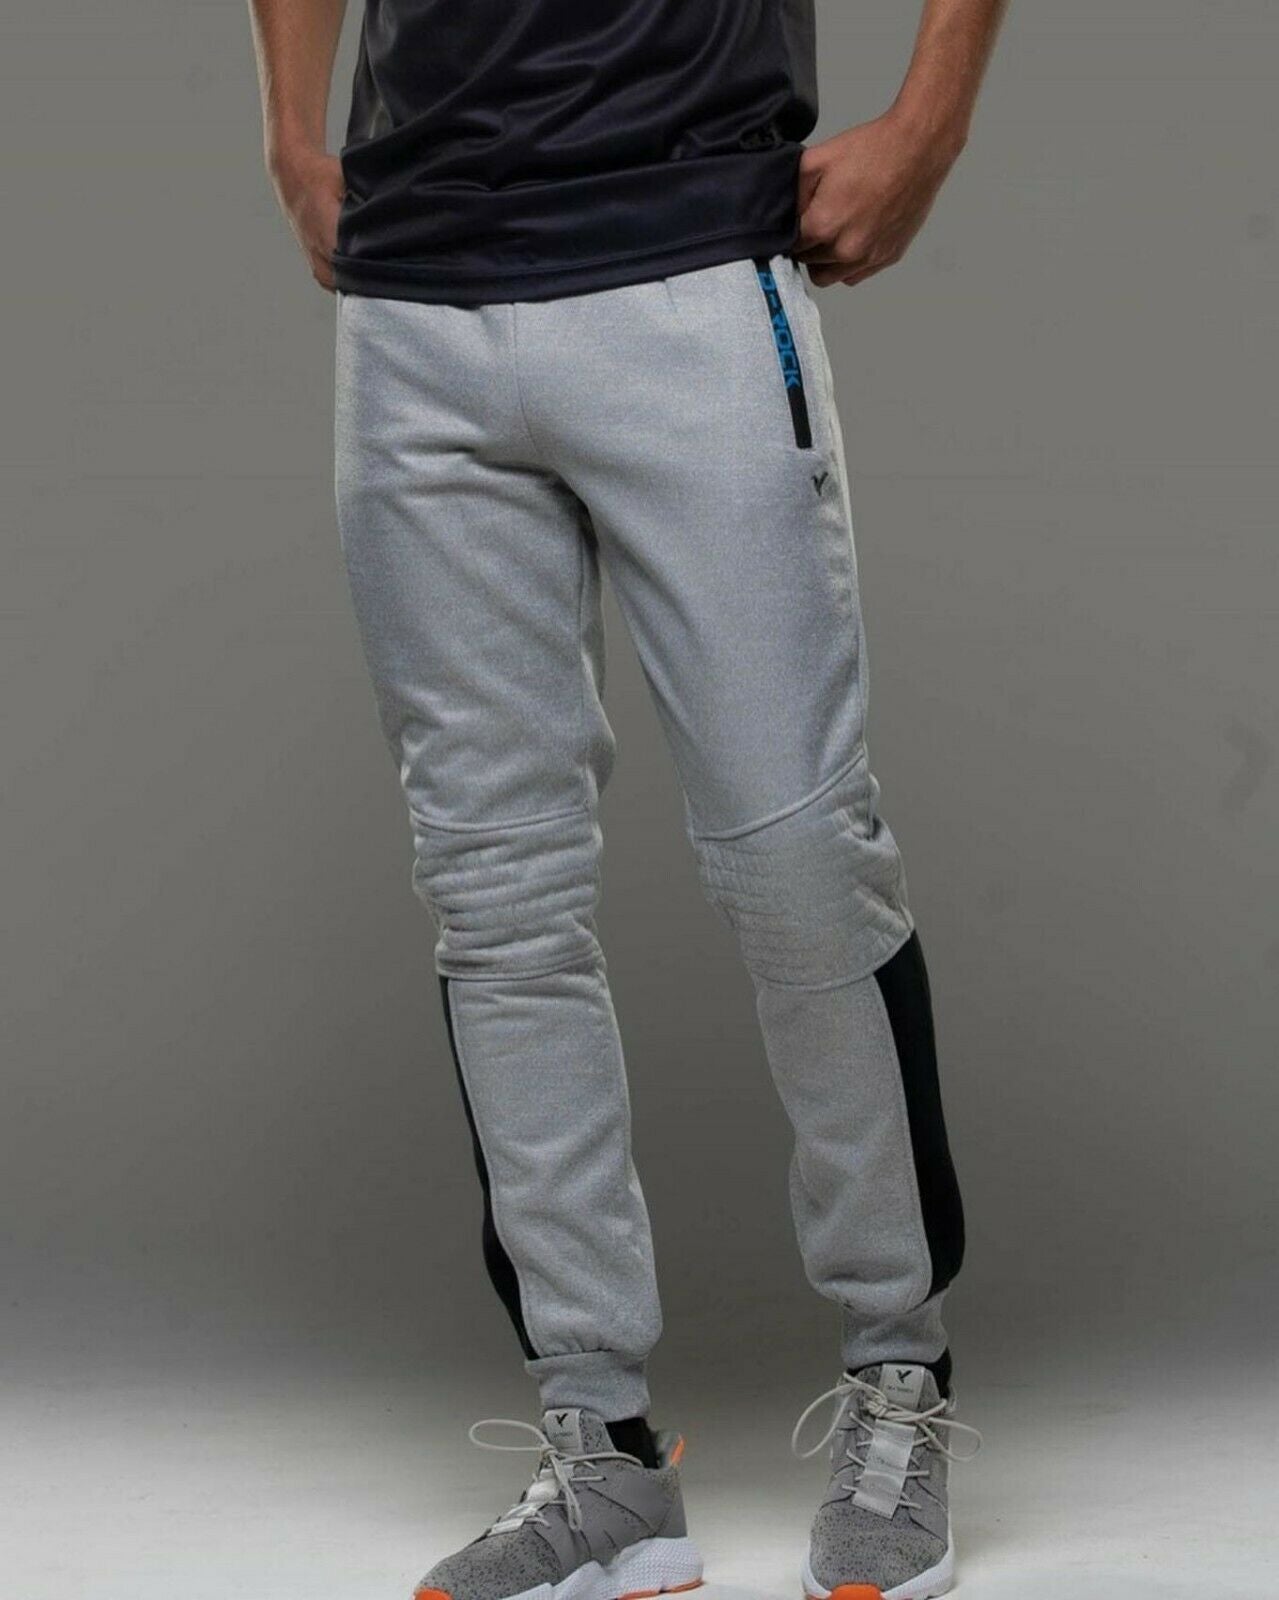 D-ROCK Cut & Sew Zipped Pocket Grey Jogging bottoms